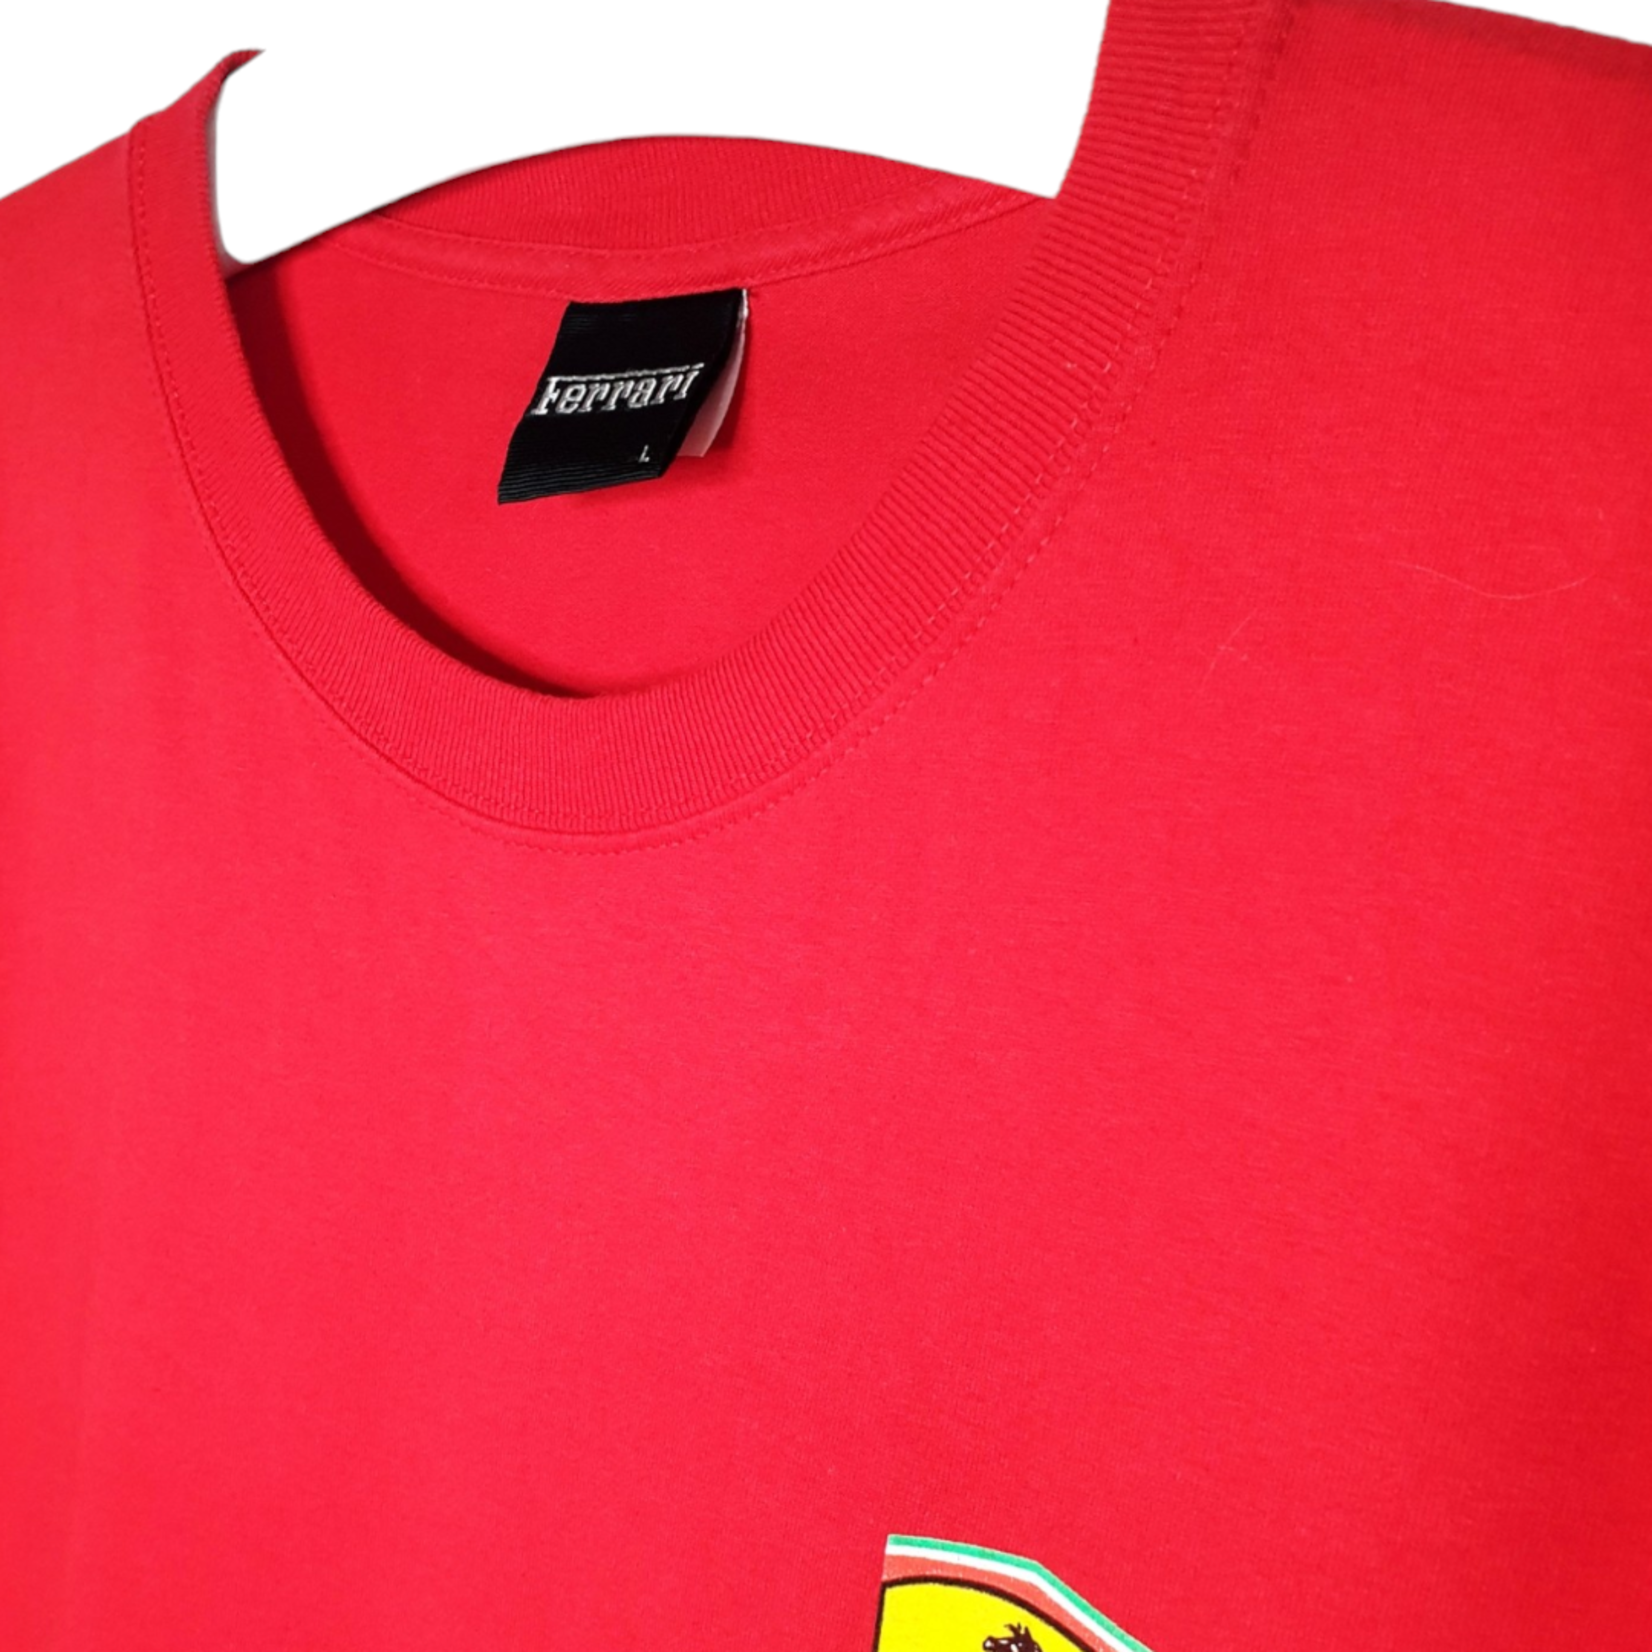 Fanwear Origineel Vintage shirt Ferrari 1999